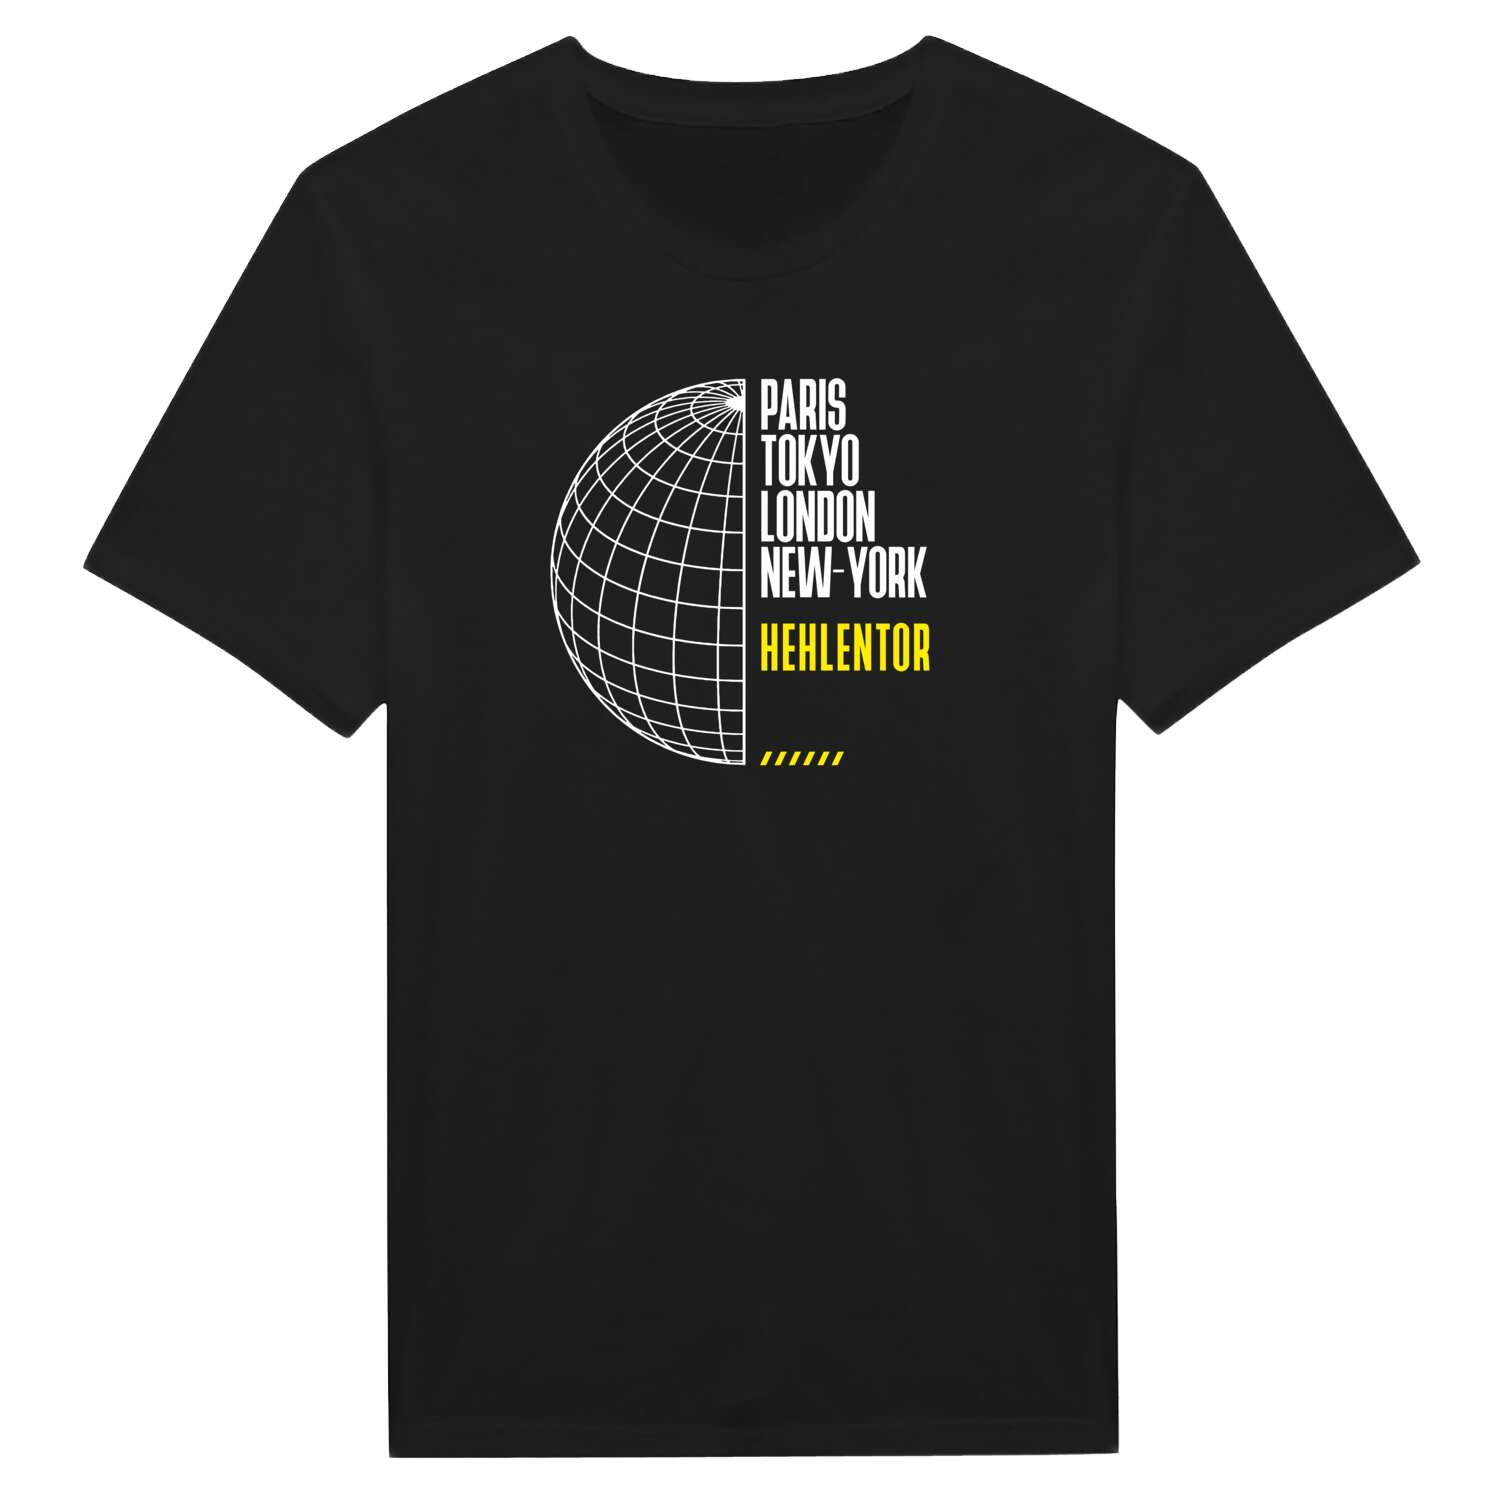 Hehlentor T-Shirt »Paris Tokyo London«